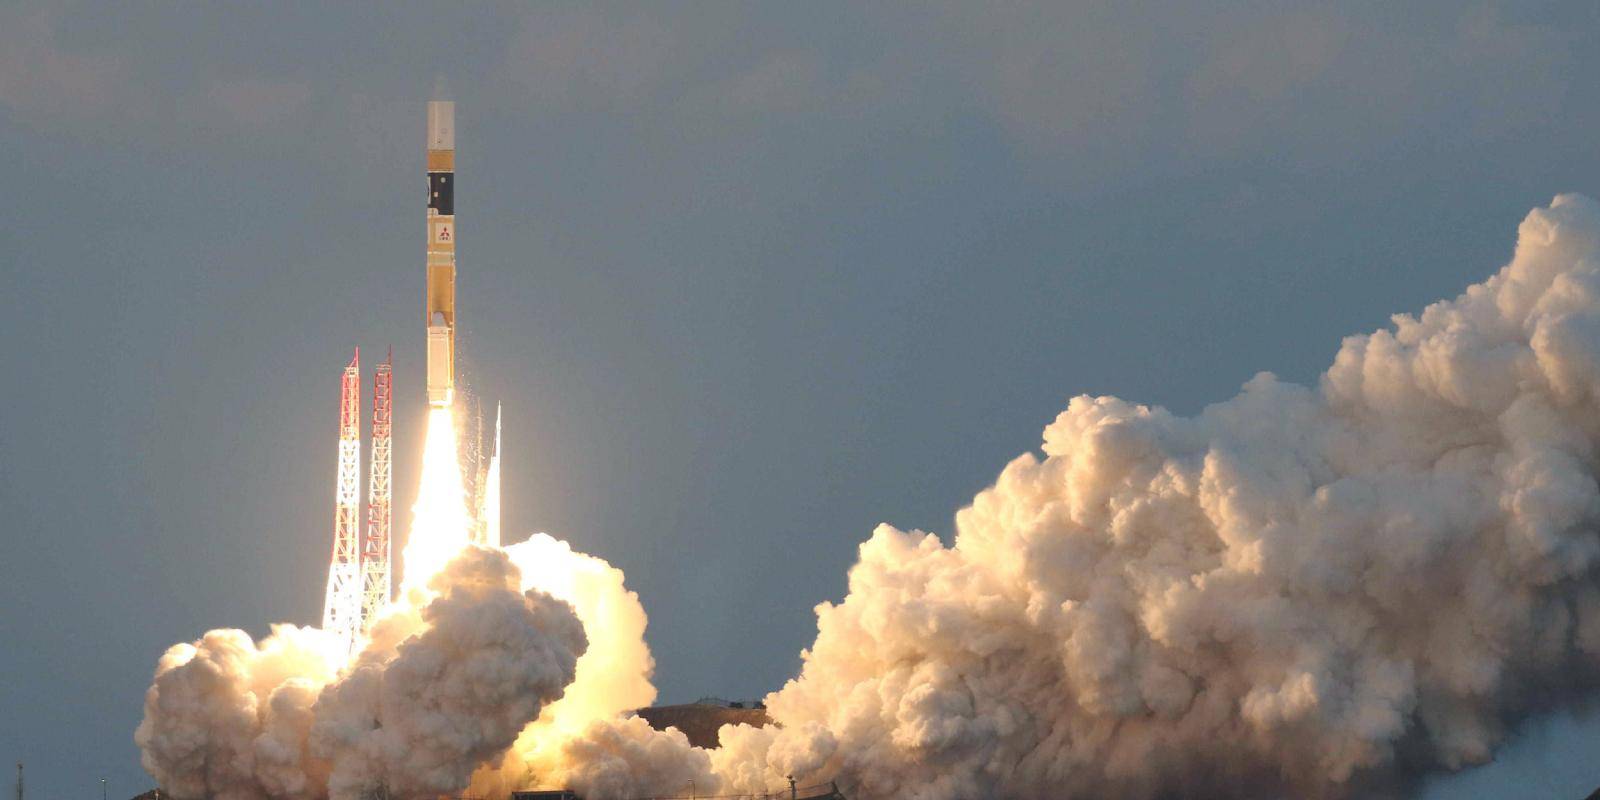 Japan JAXA rocket launch carrying ASTRO-H satellite